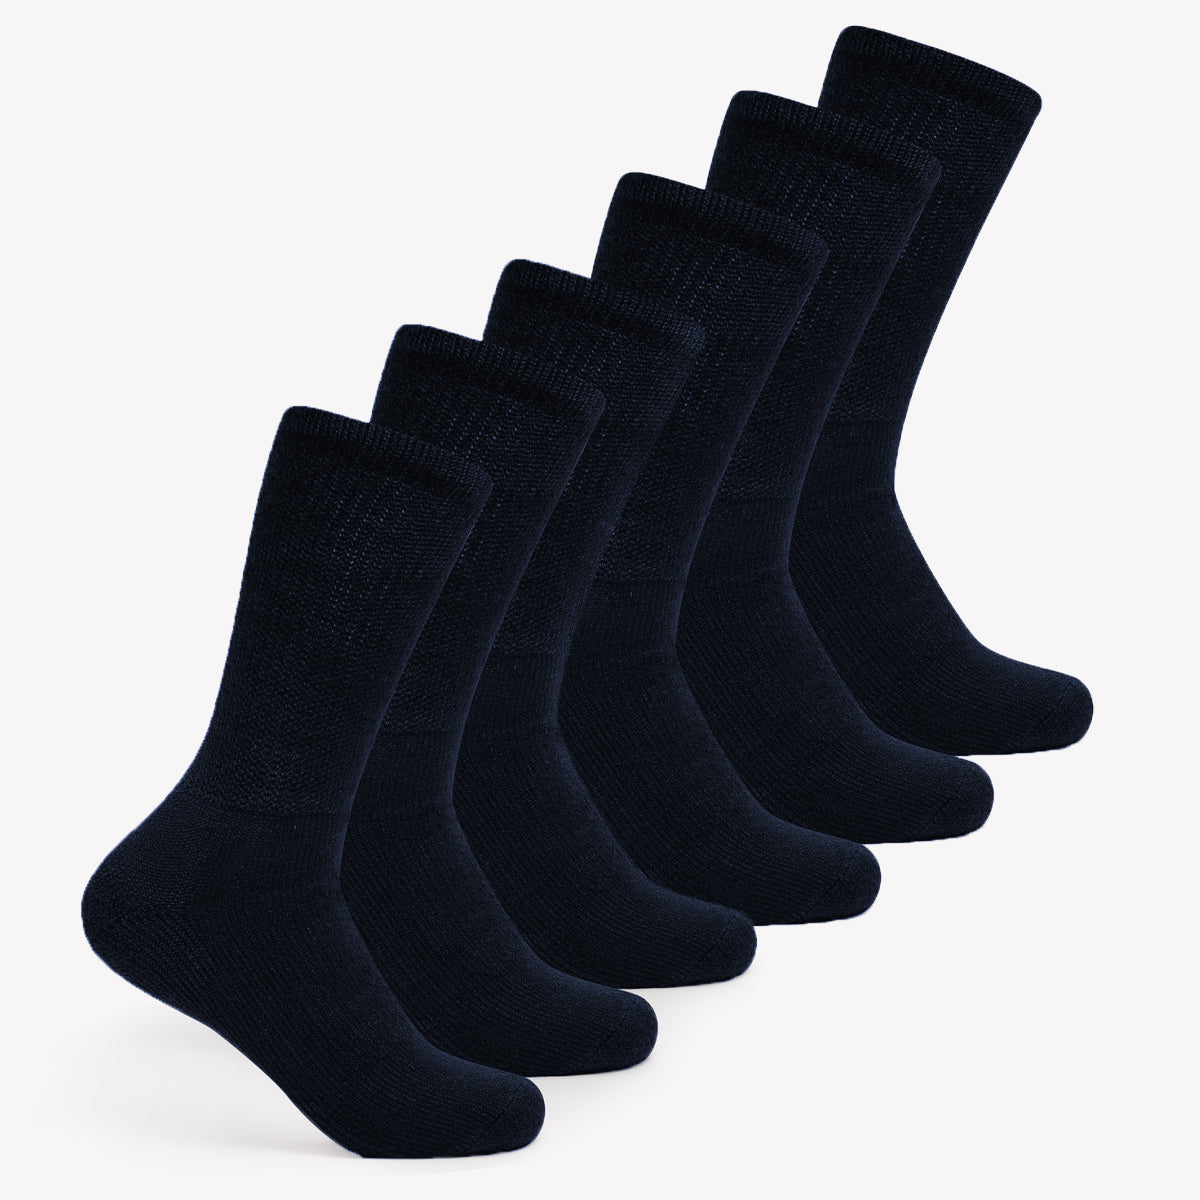 Unisex Moderate Cushion Crew Walking Socks (6 Pairs)